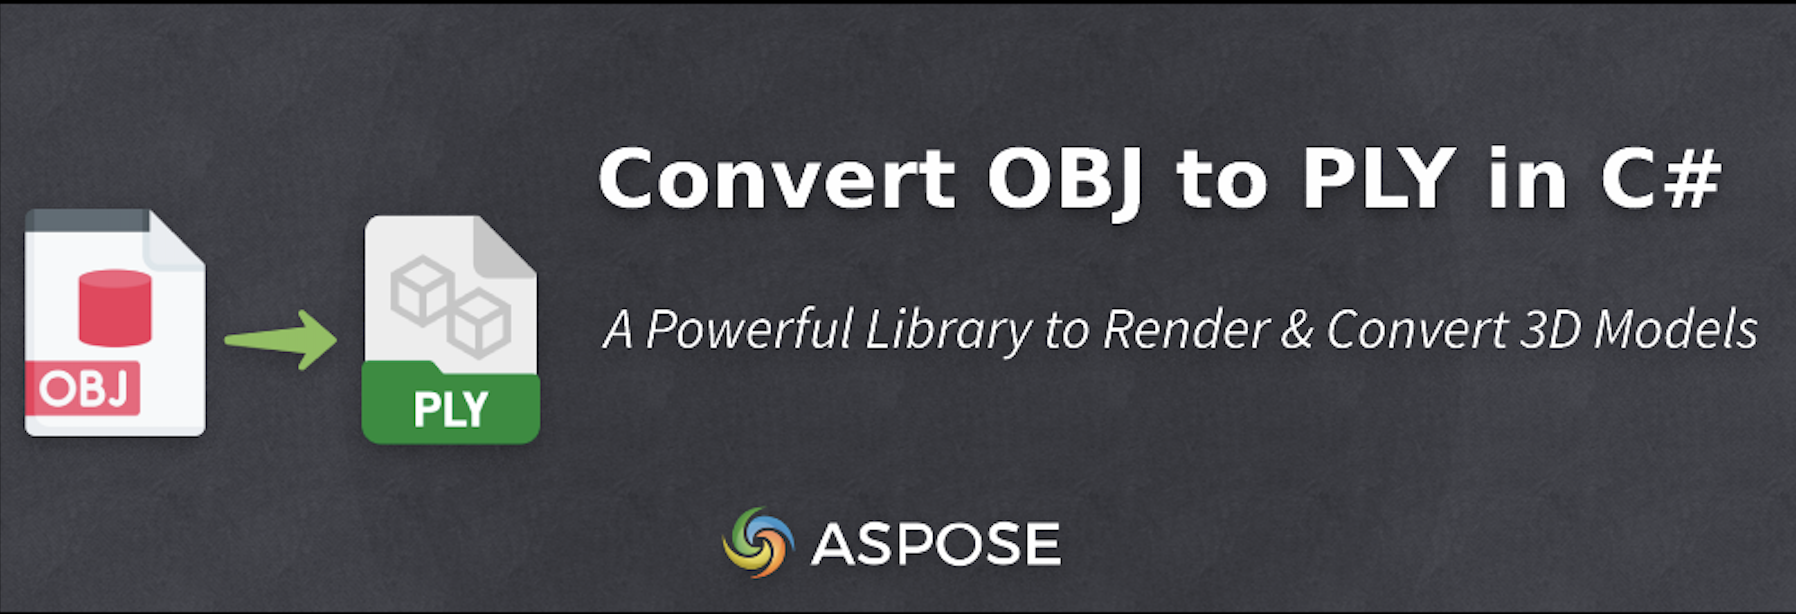 Convertir OBJ a PLY en C#